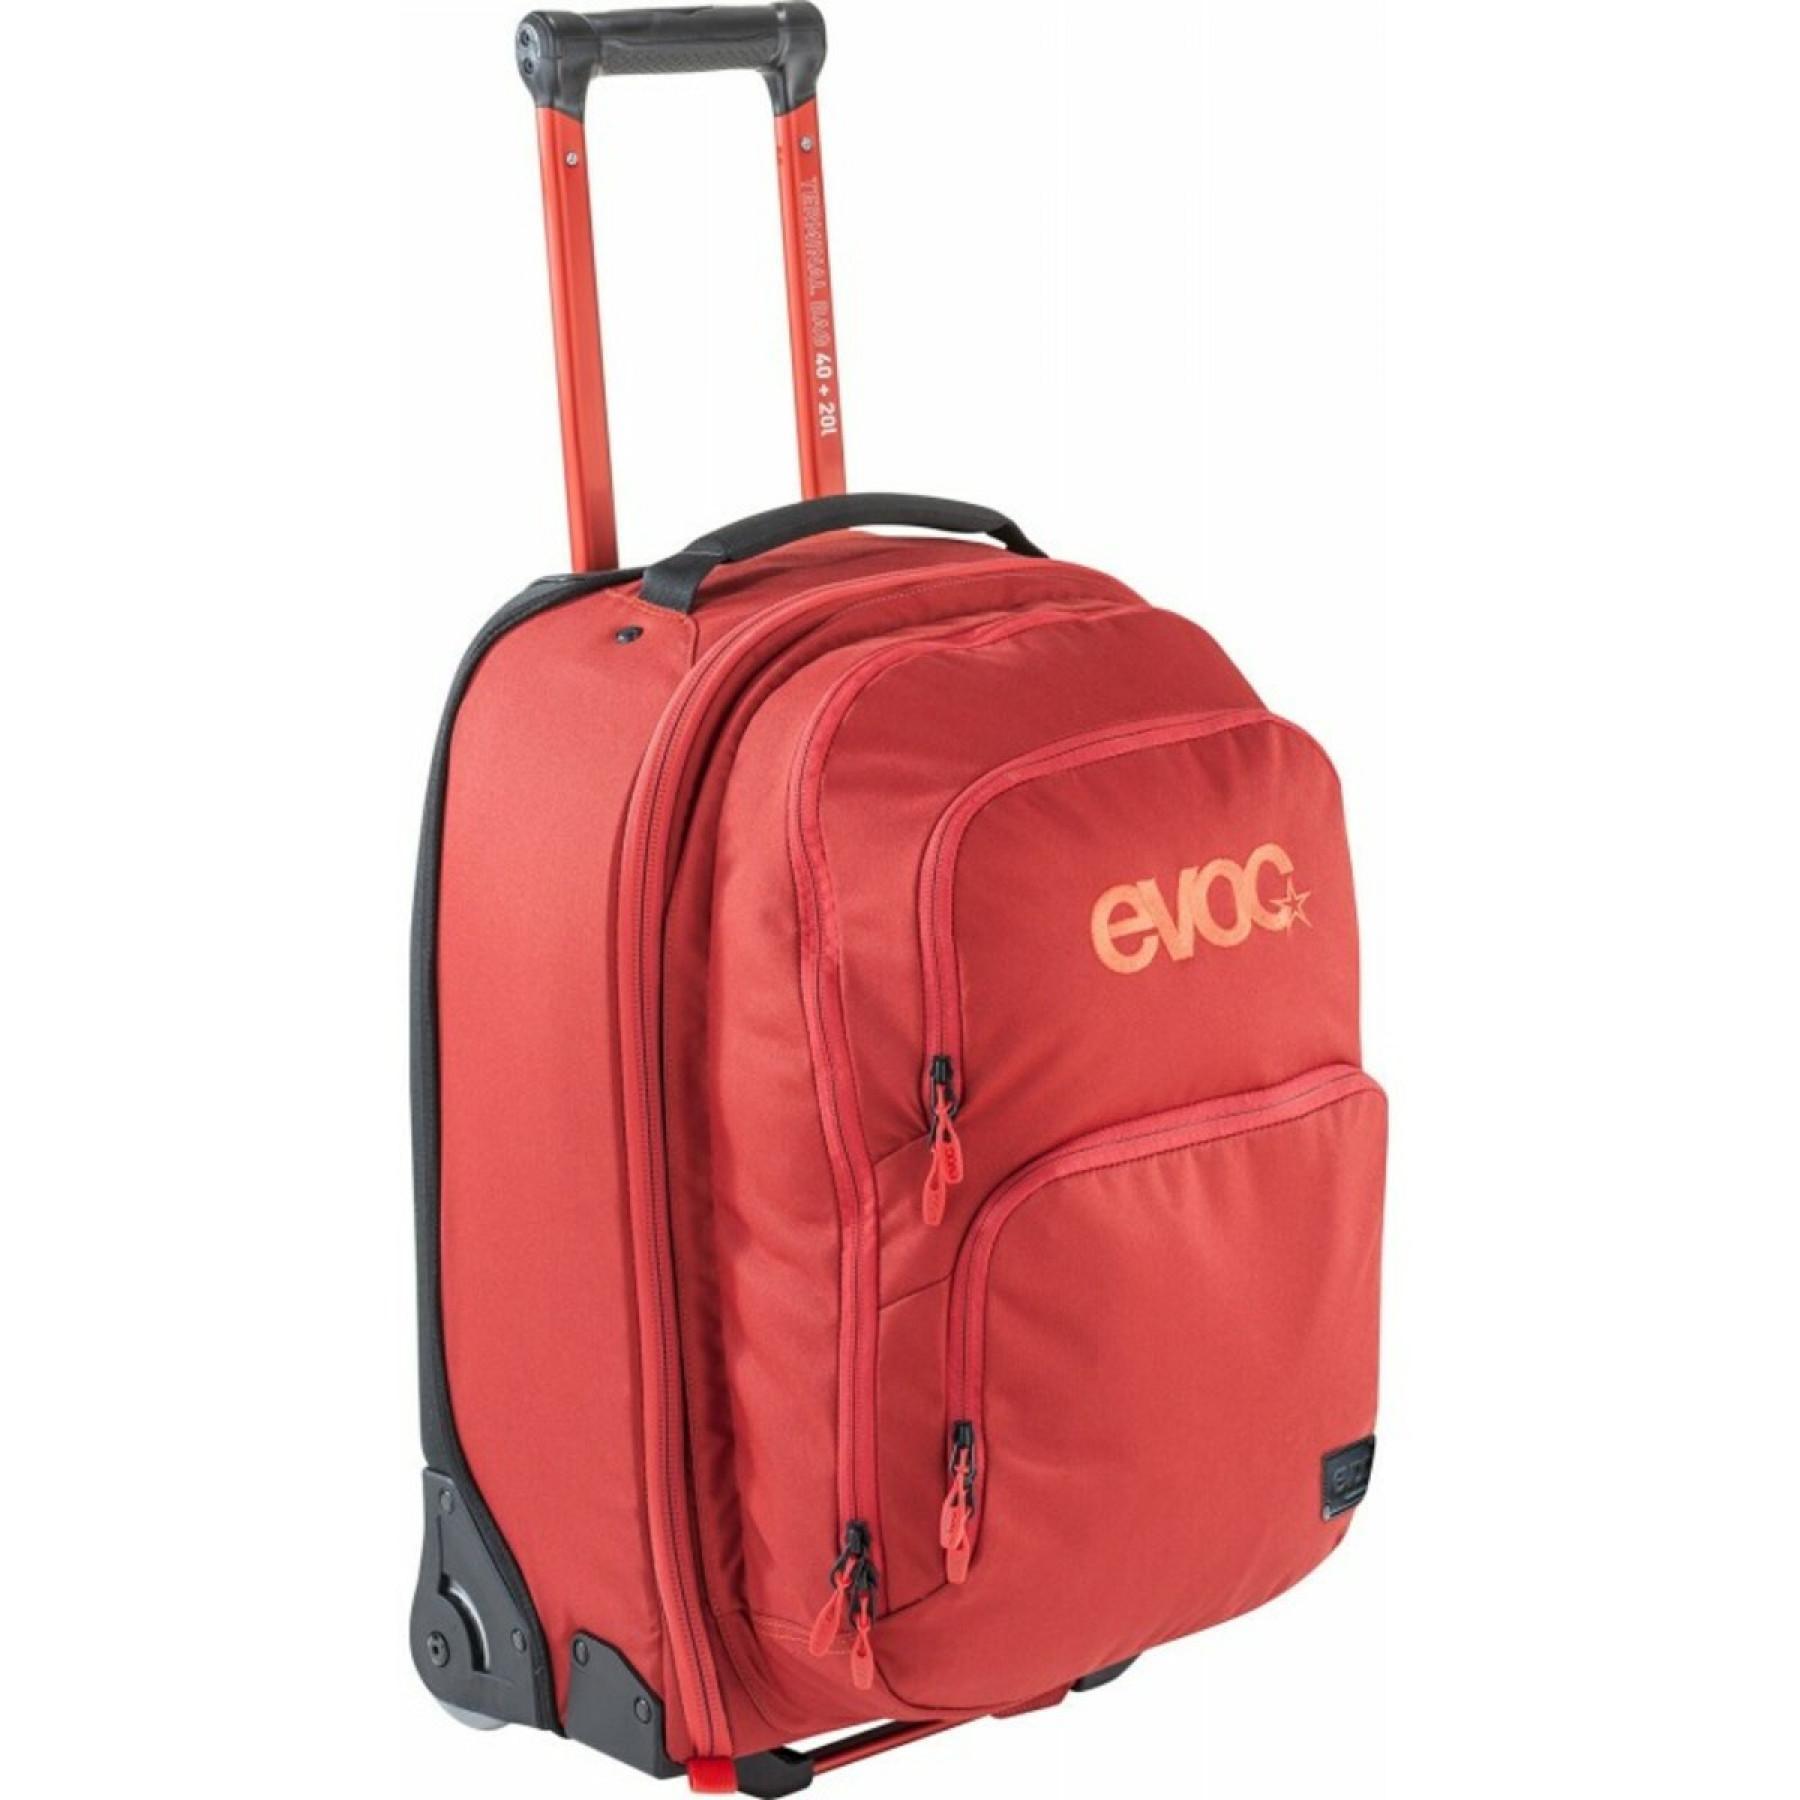 Compact suitcase Evoc Terminal